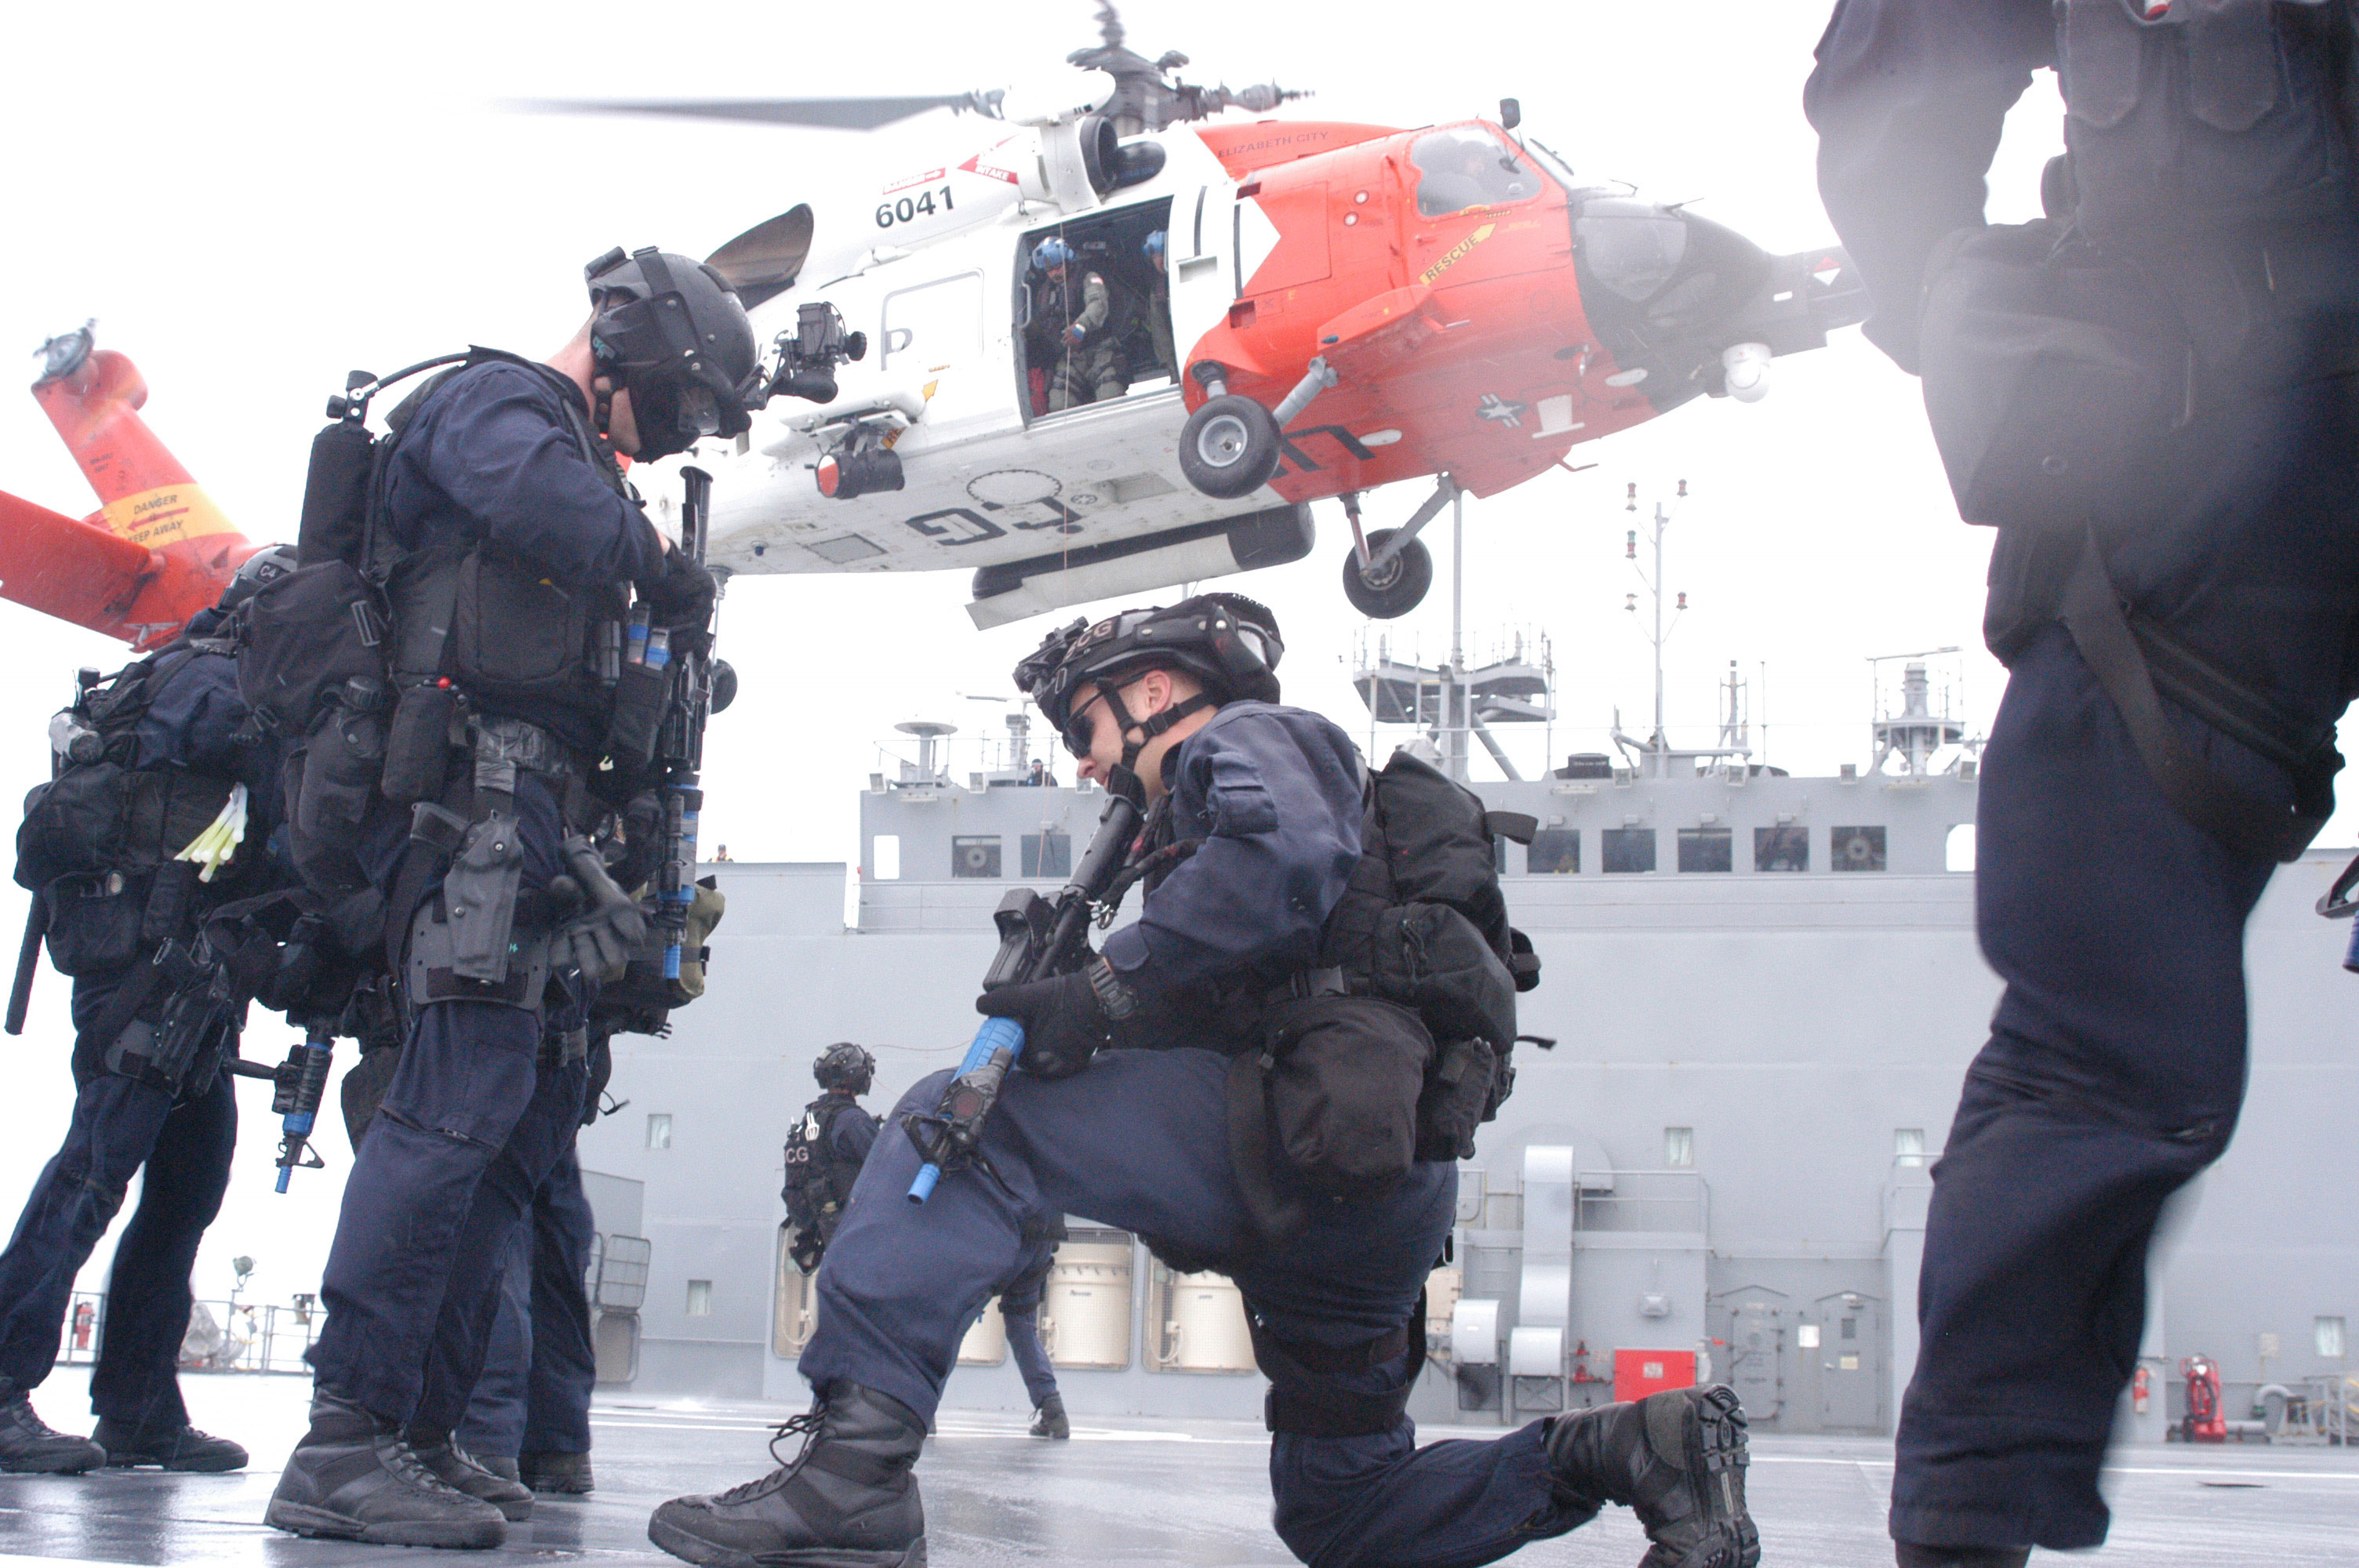 Maritime Security Response Teams